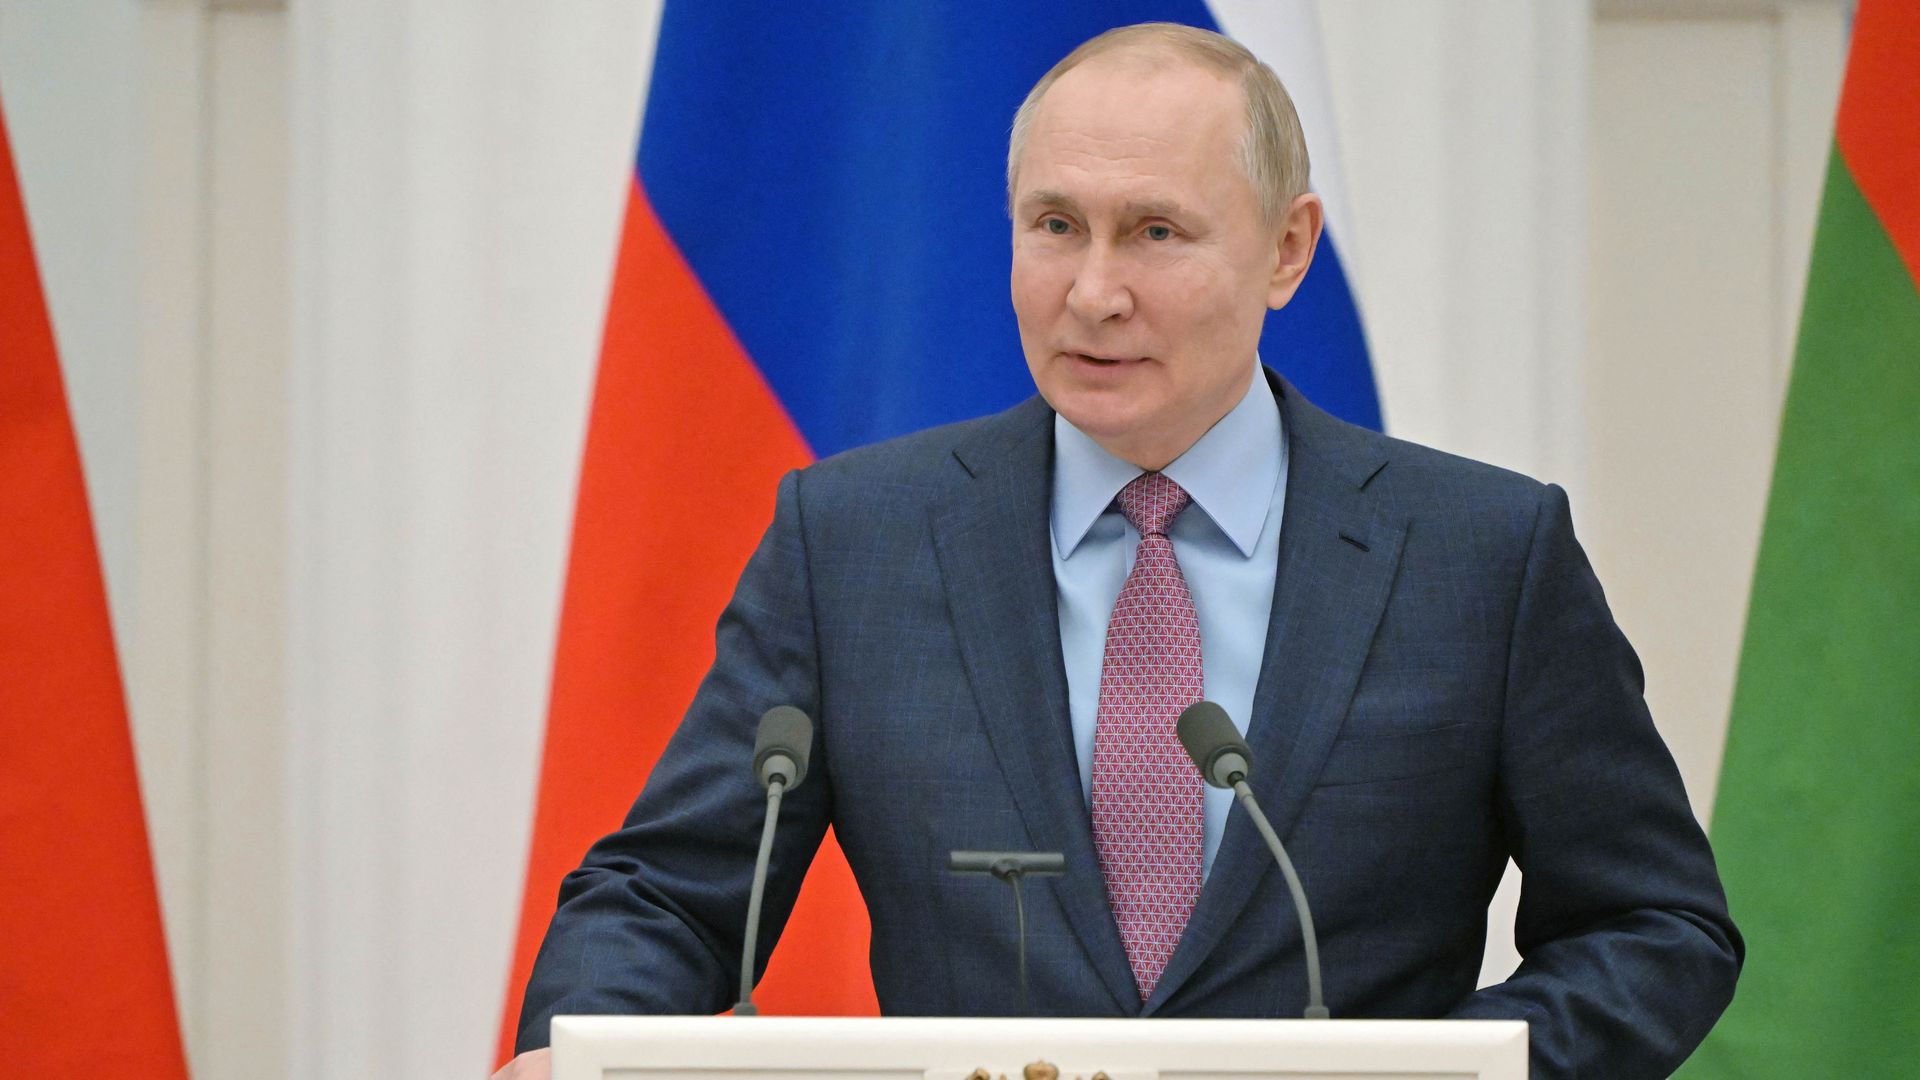 Photo of Vladimir Putin speaking from a podium